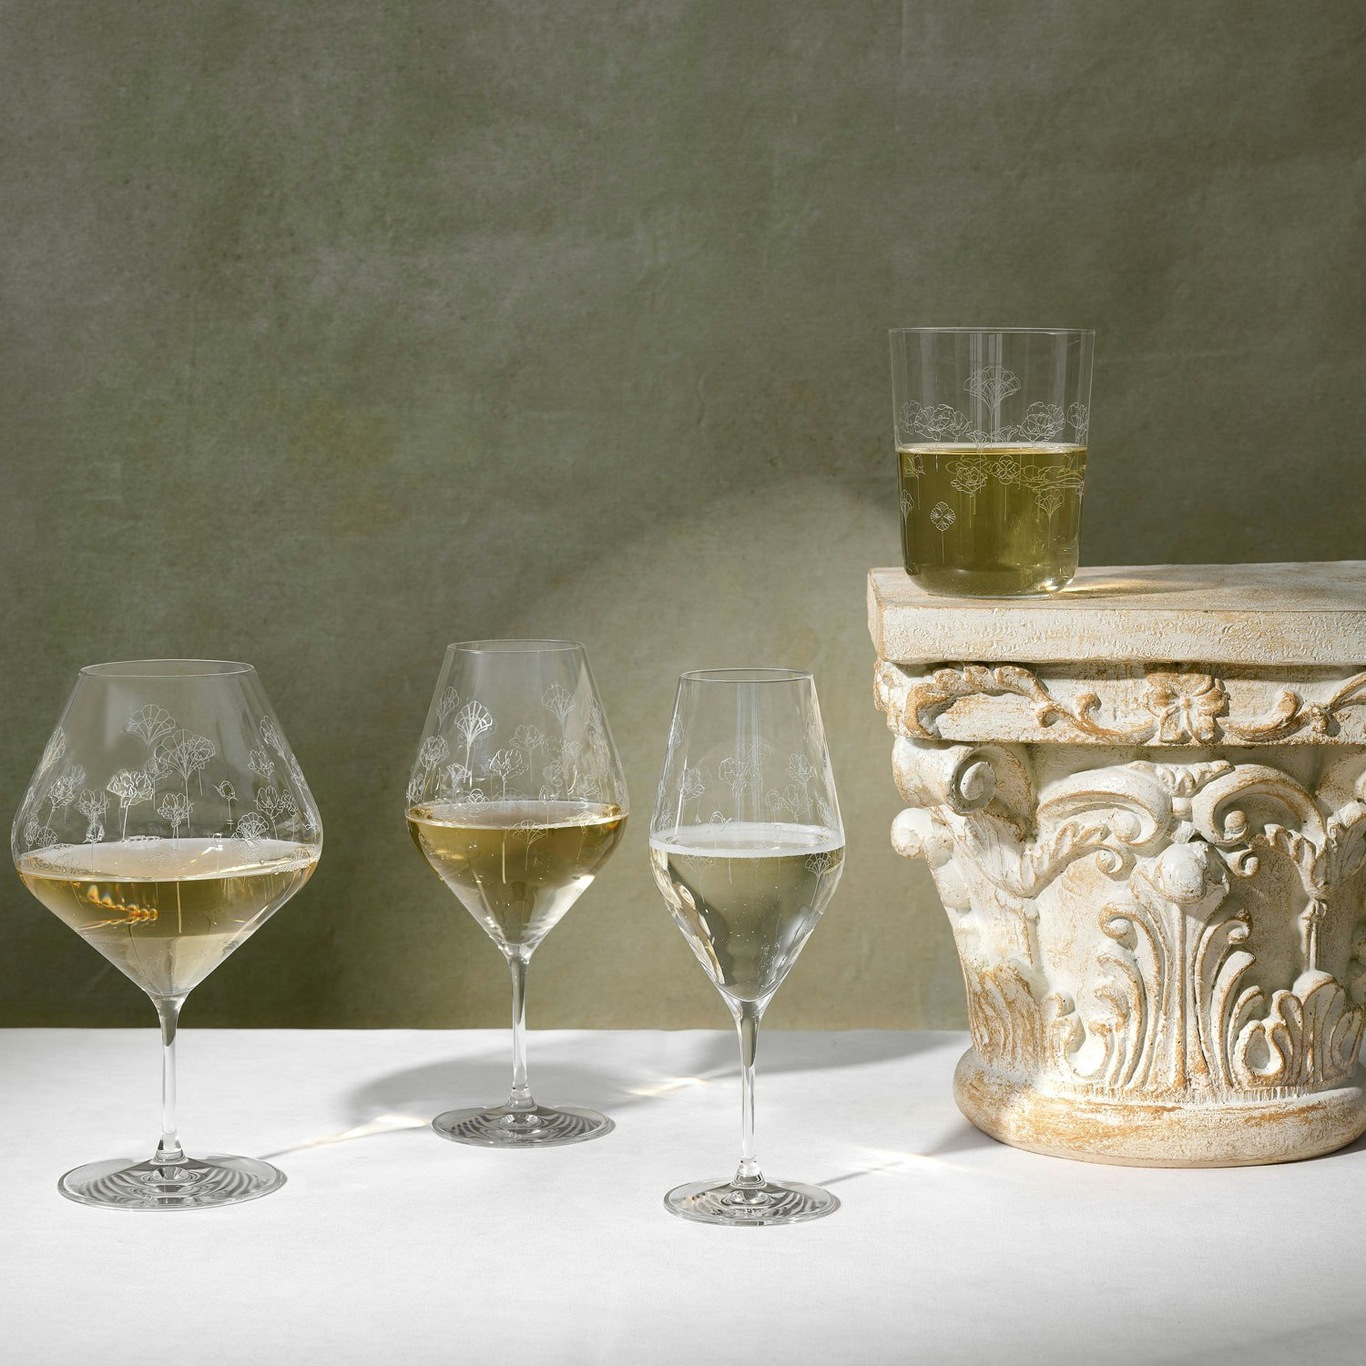 https://royaldesign.com/image/2/frederik-bagger-flower-wine-glass-2-pack-xl-89-cl-12?w=800&quality=80